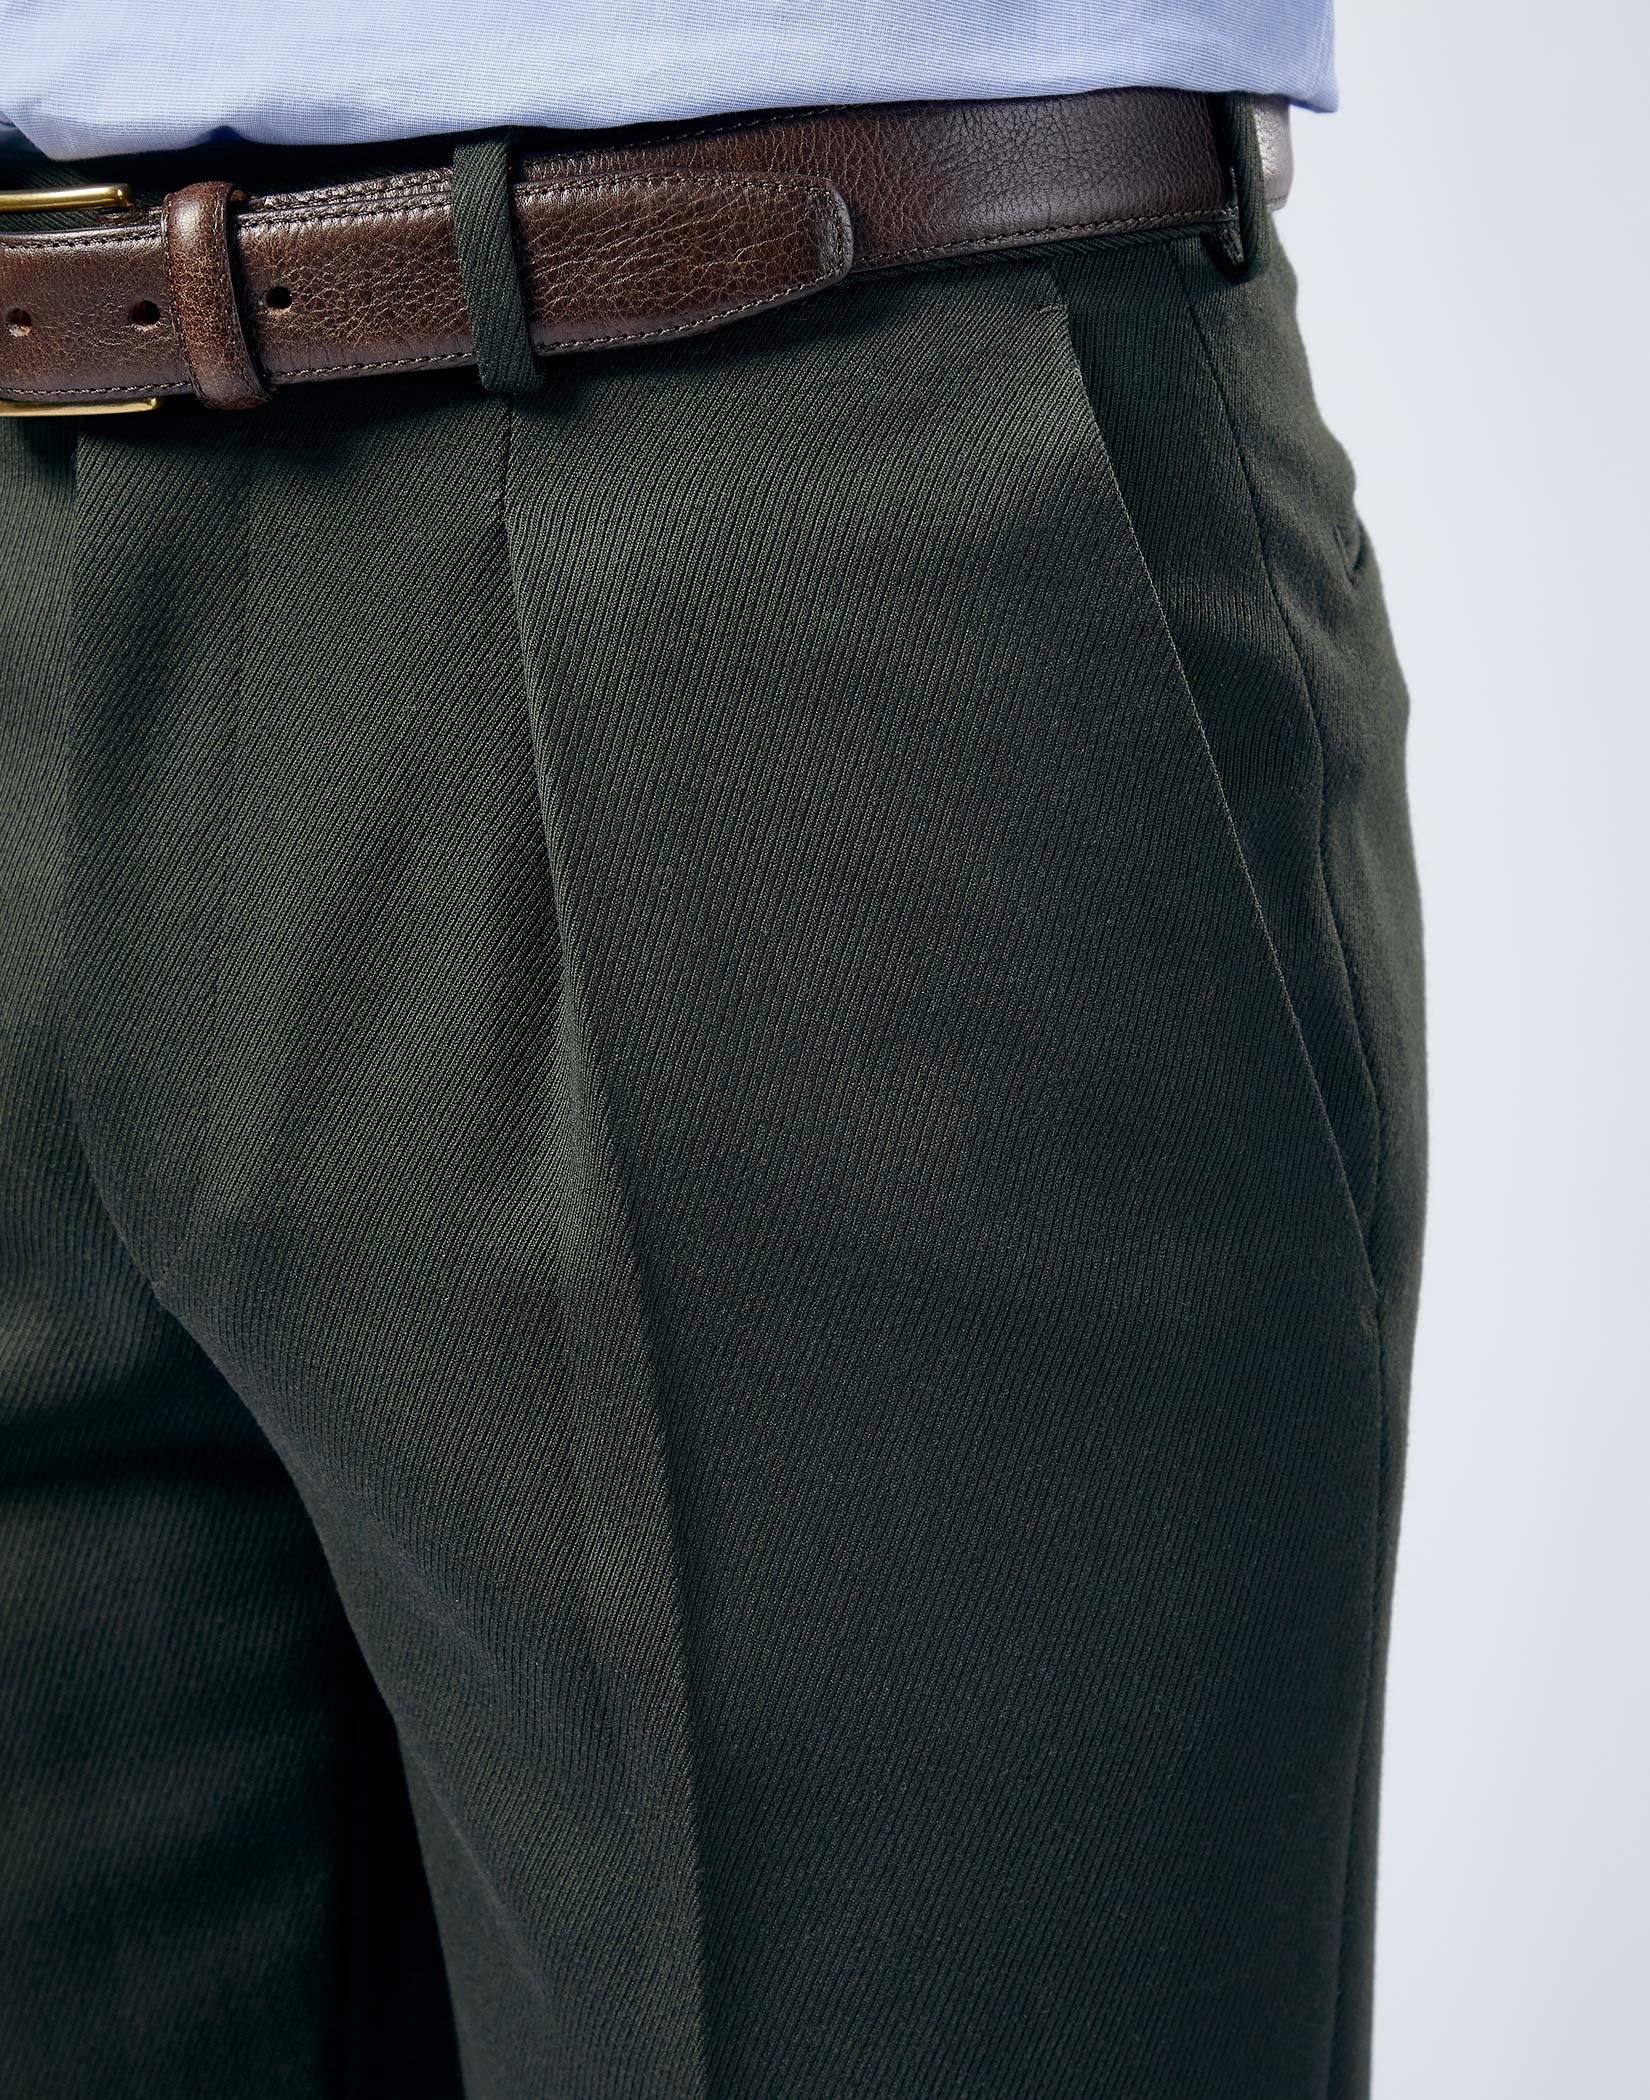 Cavalry twill trousers for gentlemen  classic fawn trouser  Aidan Sweeney